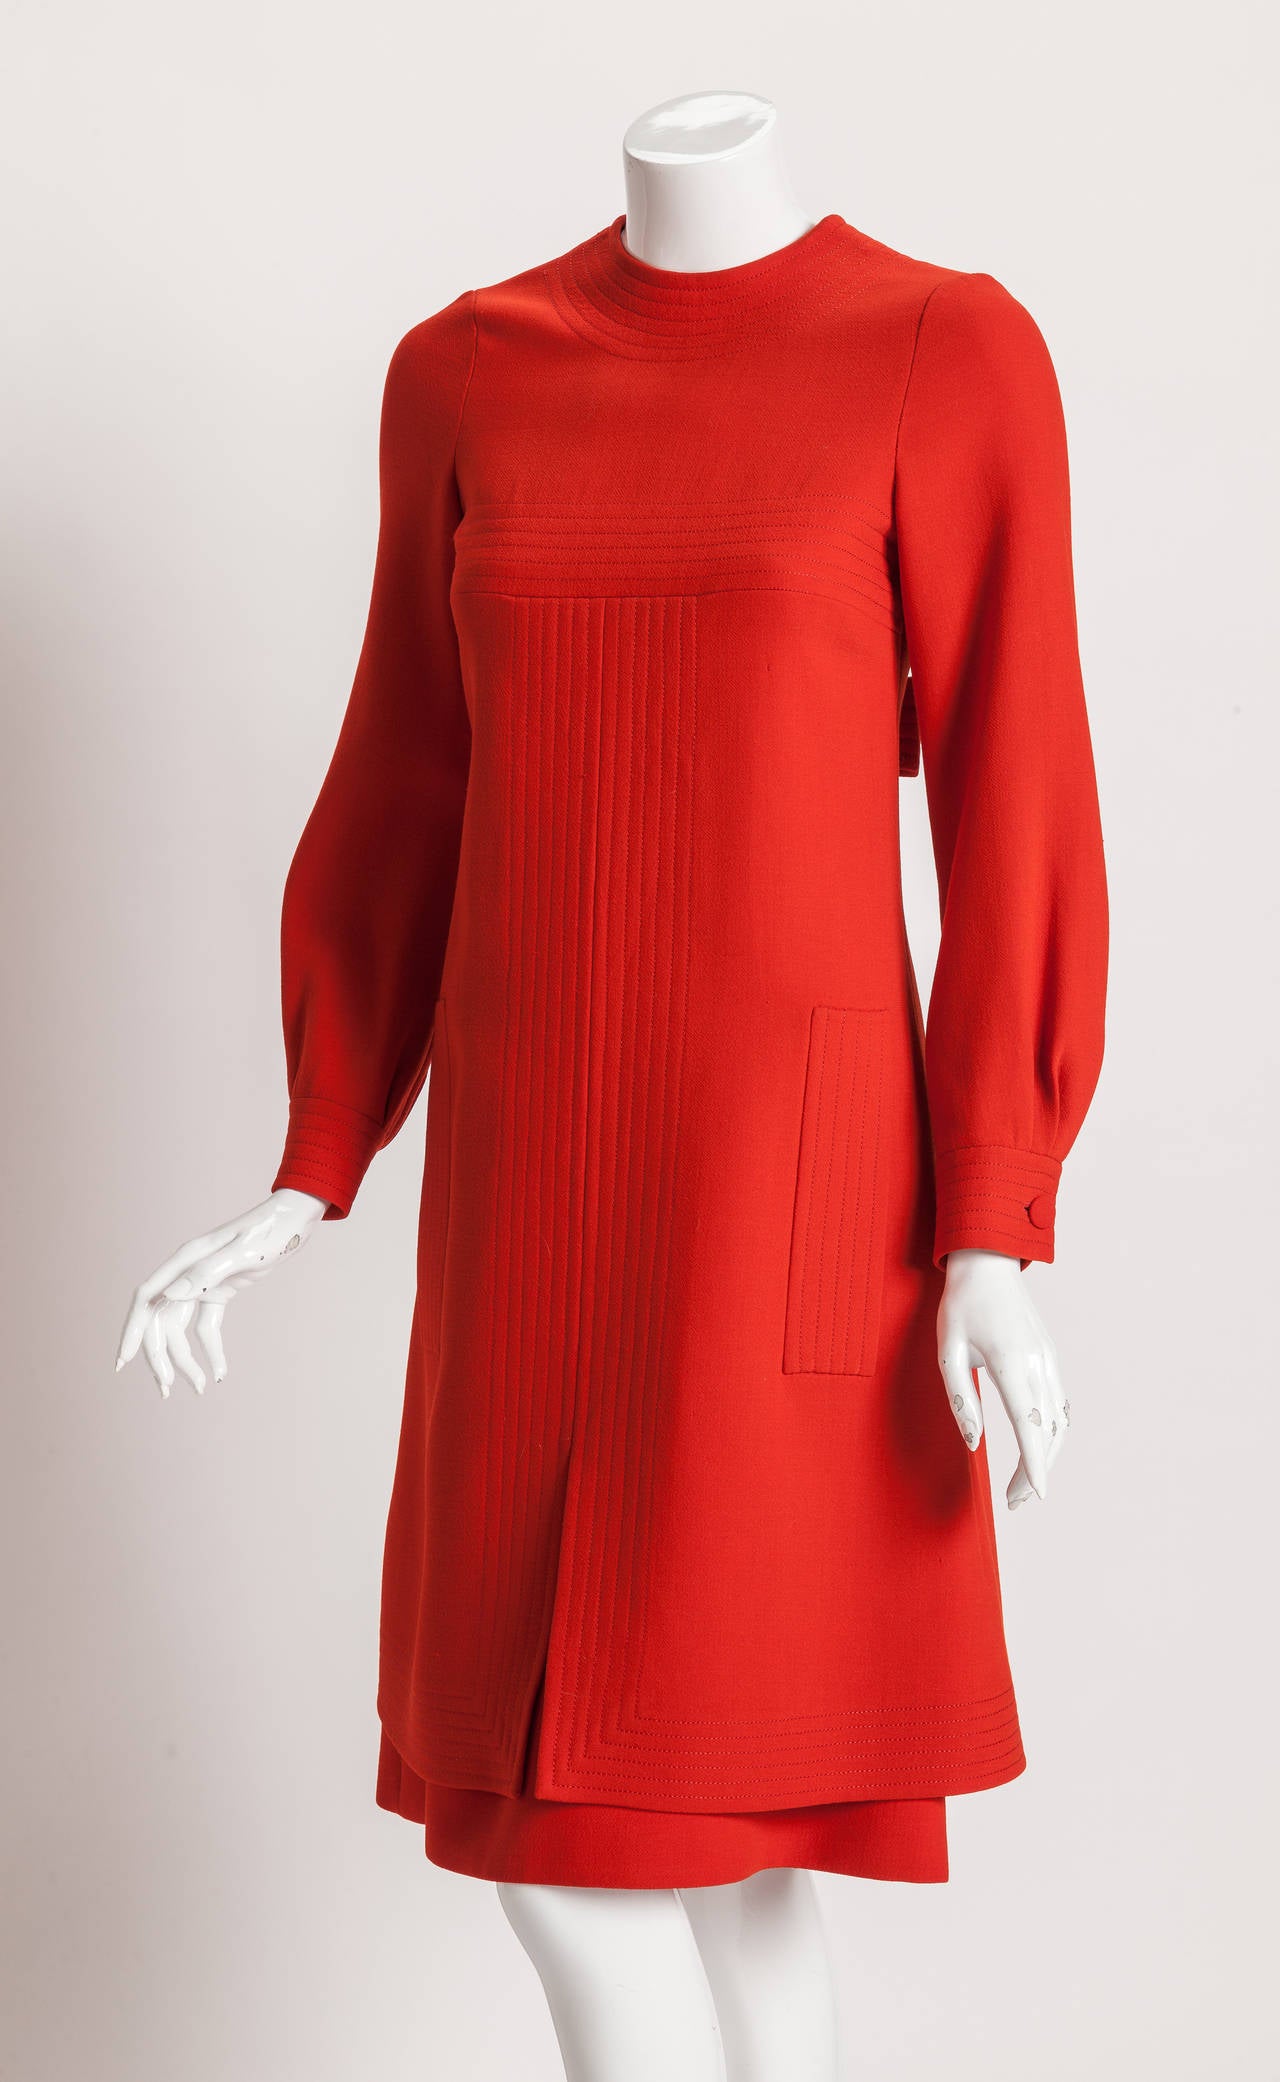 wool dress design